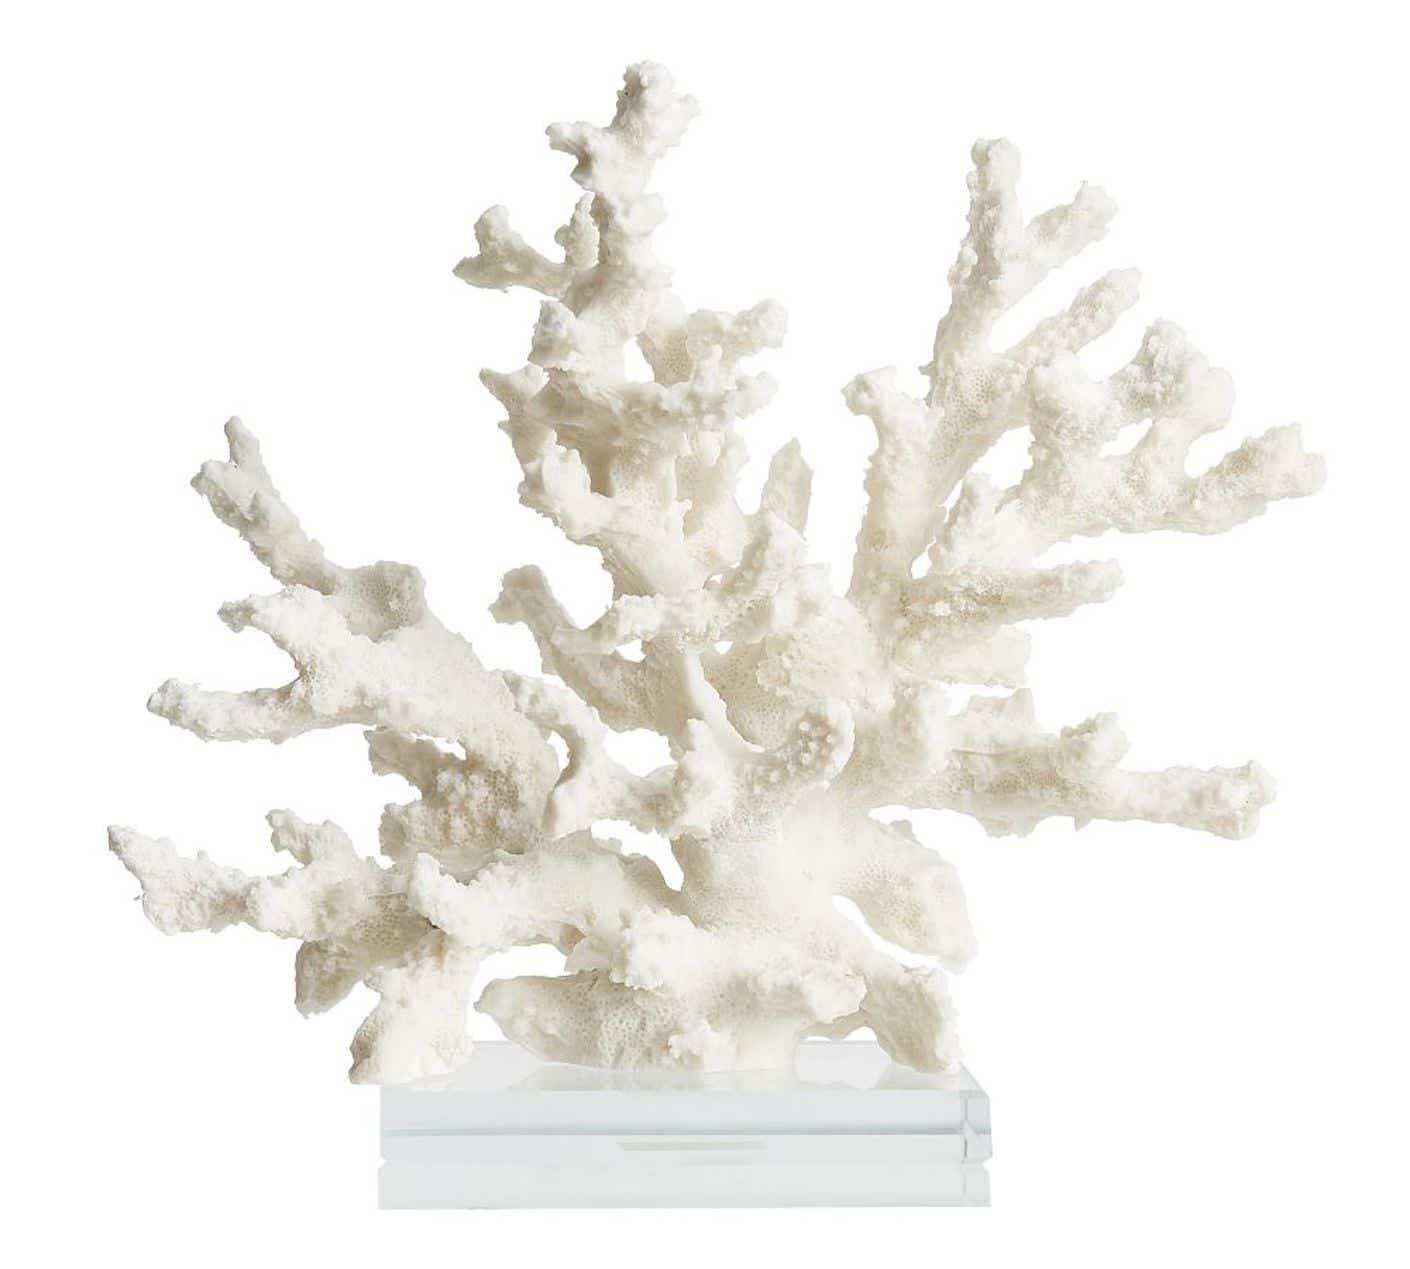 A coral sculpture.